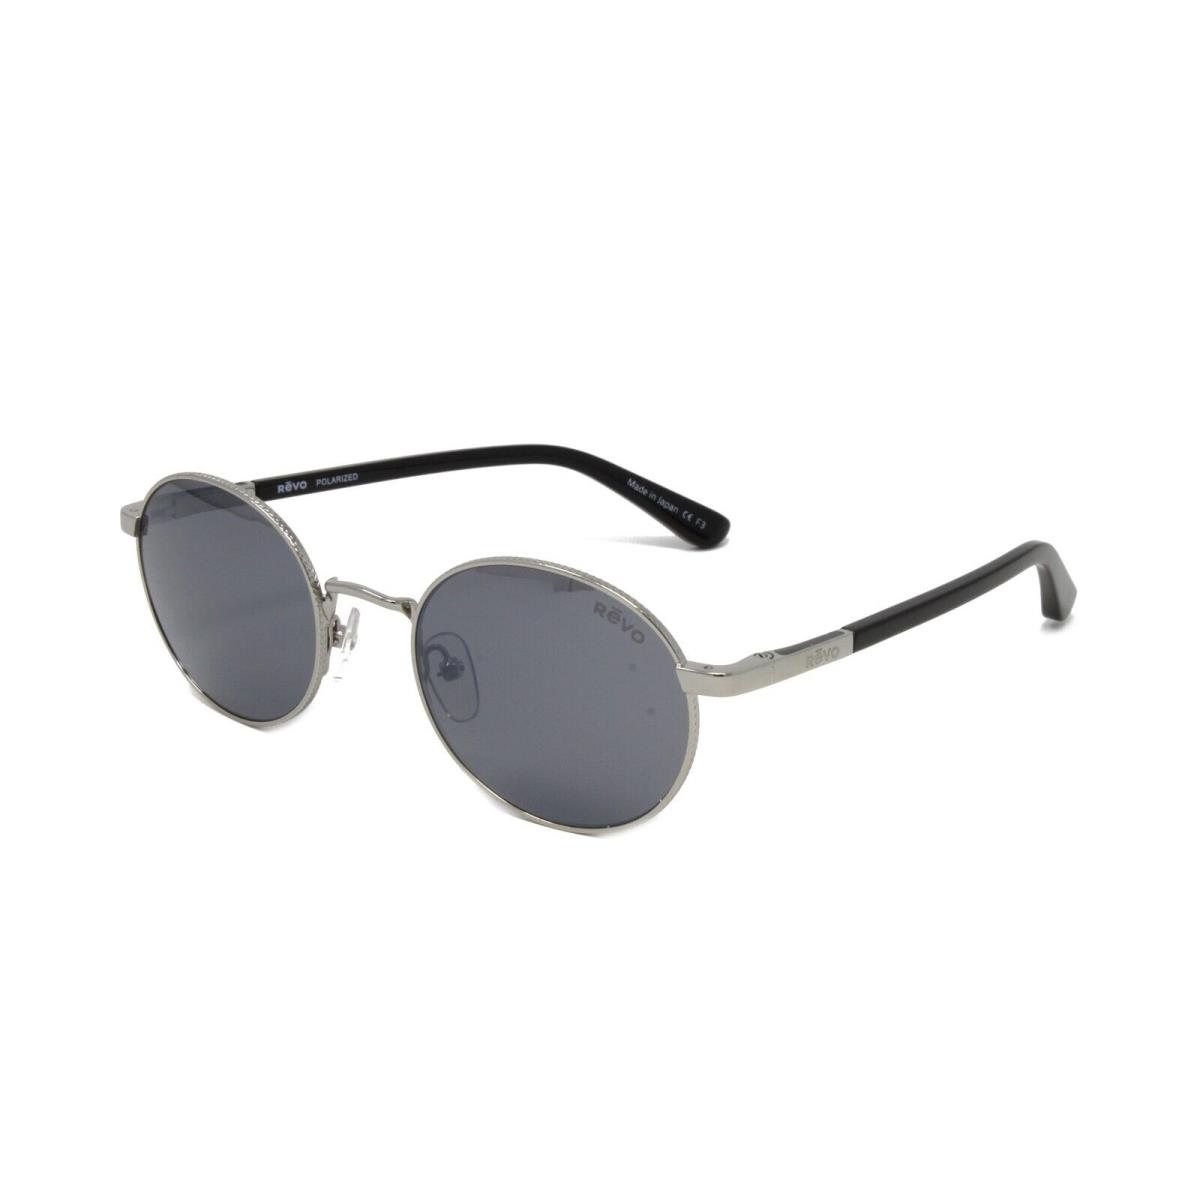 Revo Sunglasses Riley RE1143 03GY Chrome Graphite Polarized Lens 50mm - Frame: Silver, Lens: Gray